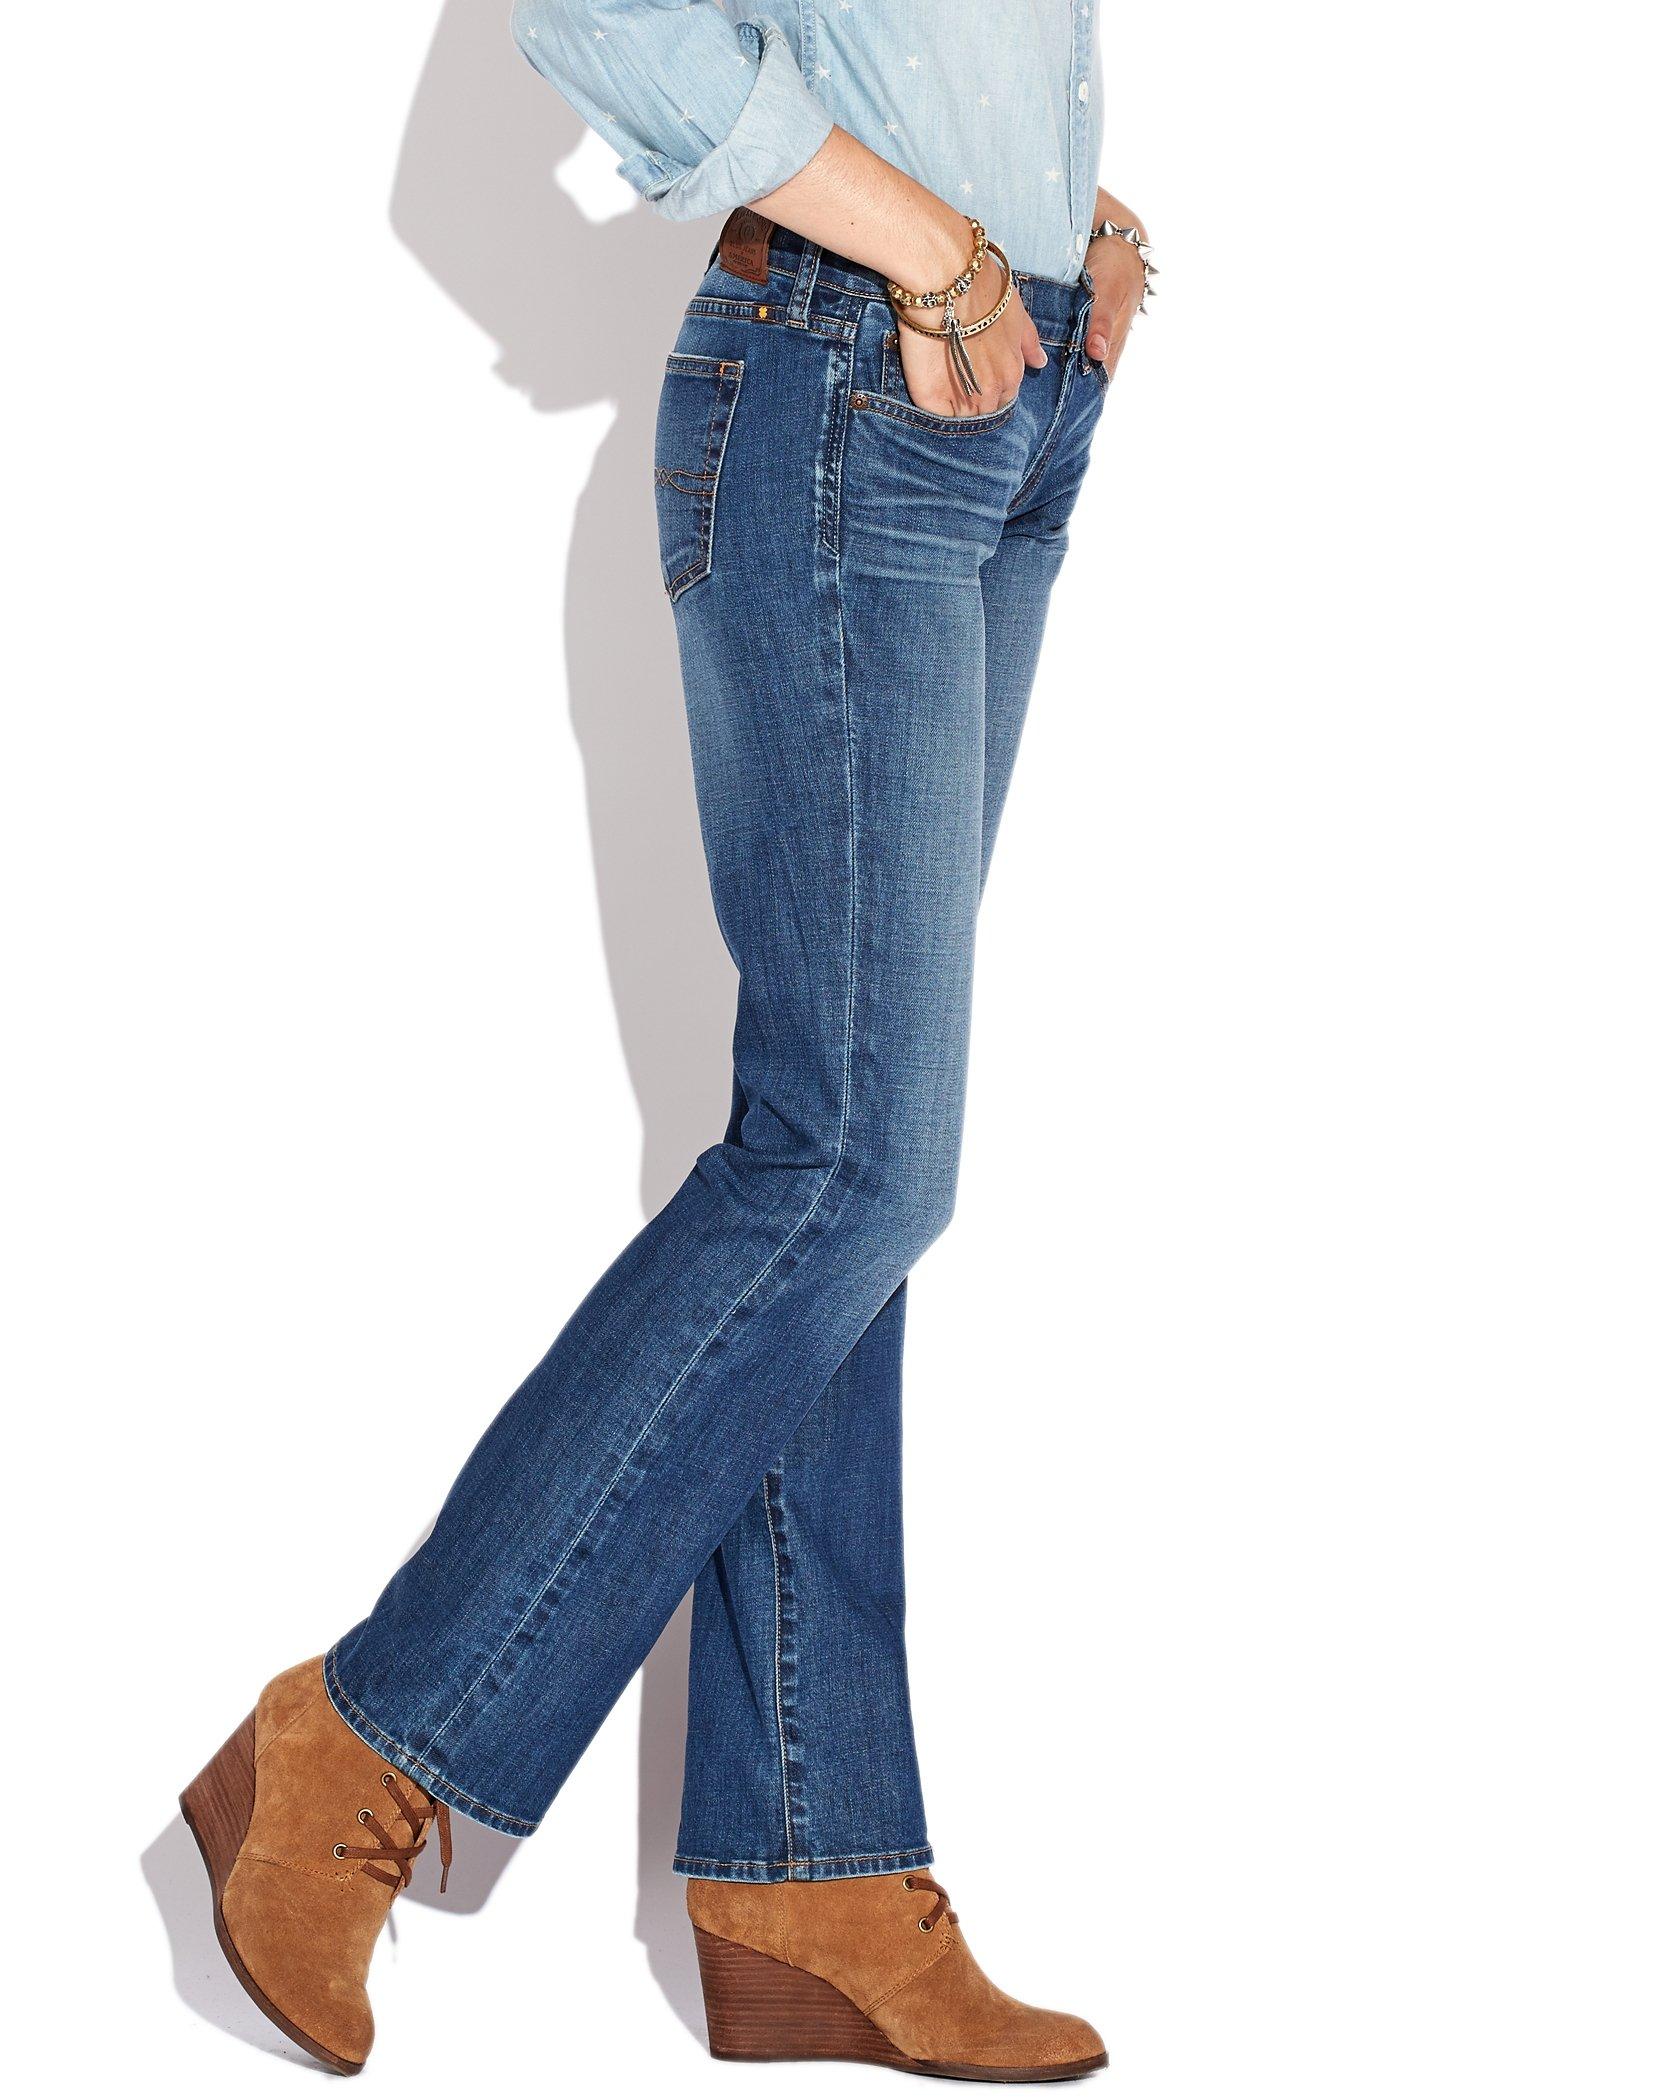 Lucky Brand women's Jeans size 10 / 30 Regular Classic Rider